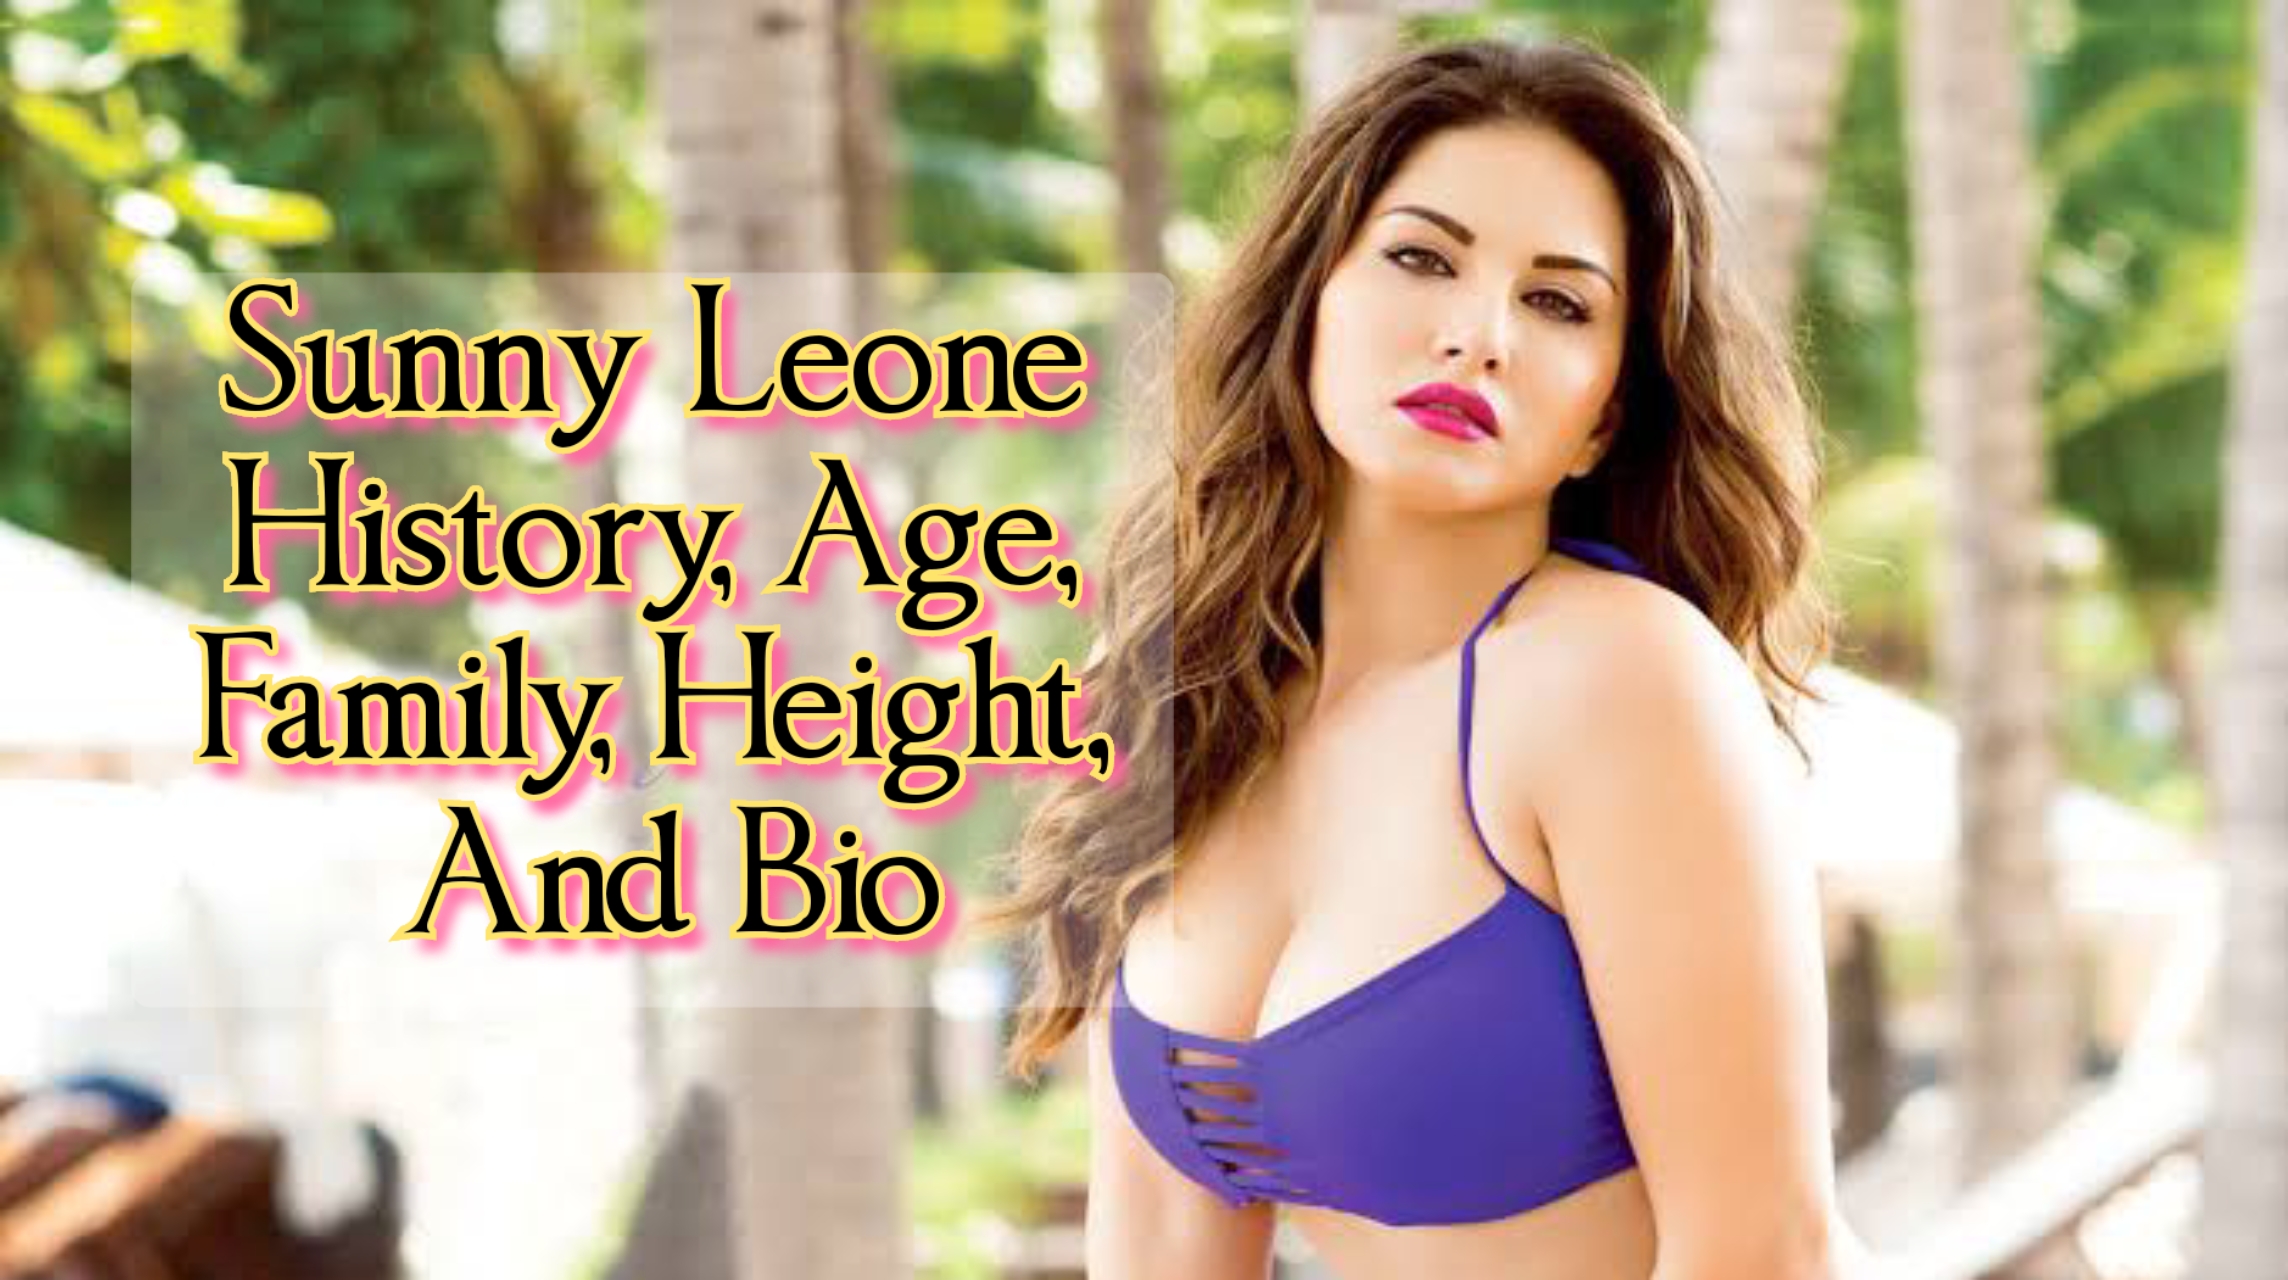 Sanny Leoni Sexy Dog - Sunny Leone Bio, Age, History, Family, Height And Weight - WORLD INFO